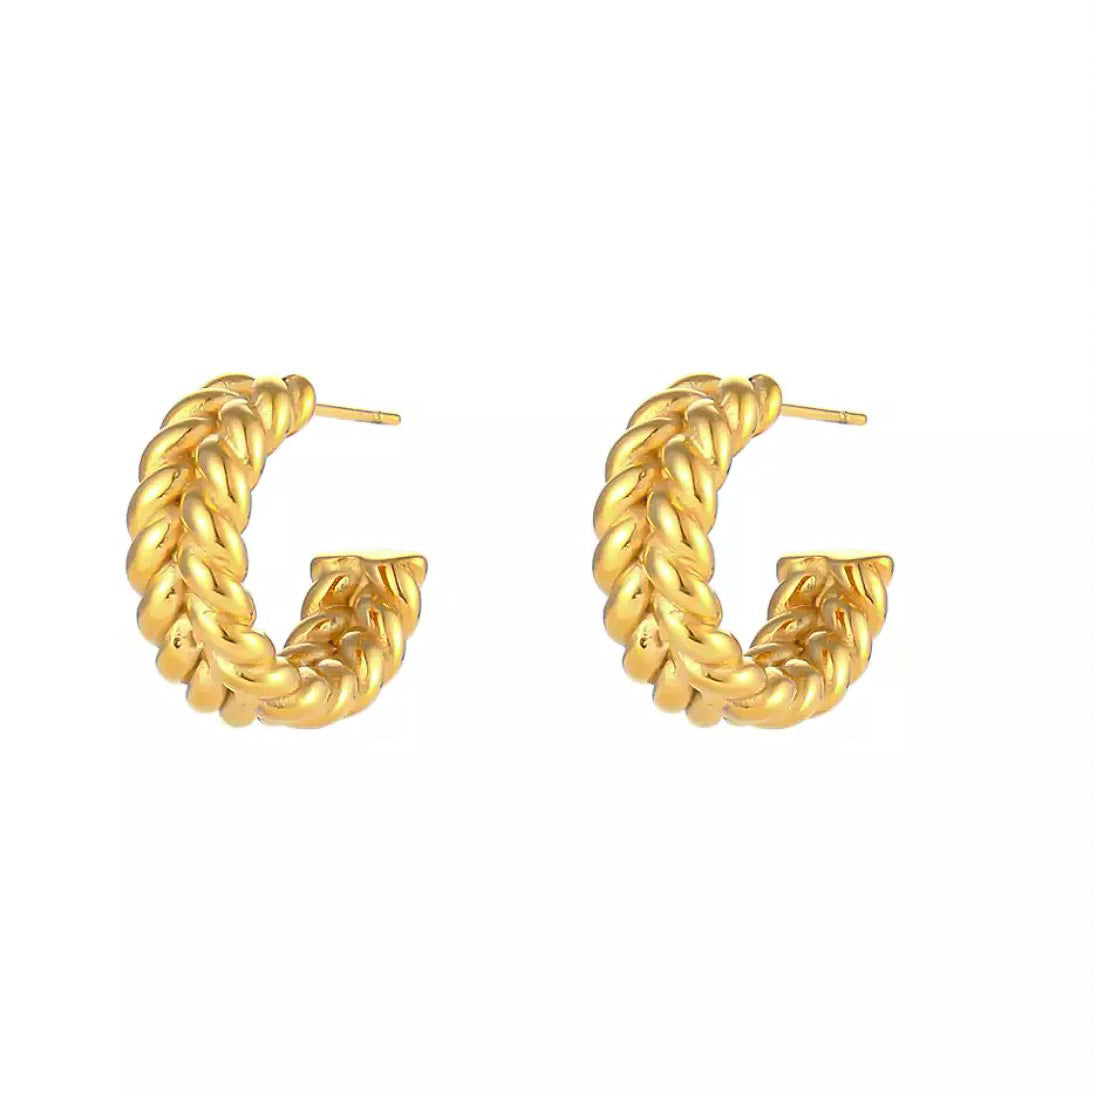 Nikita Braided Earrings│18k Gold Plated